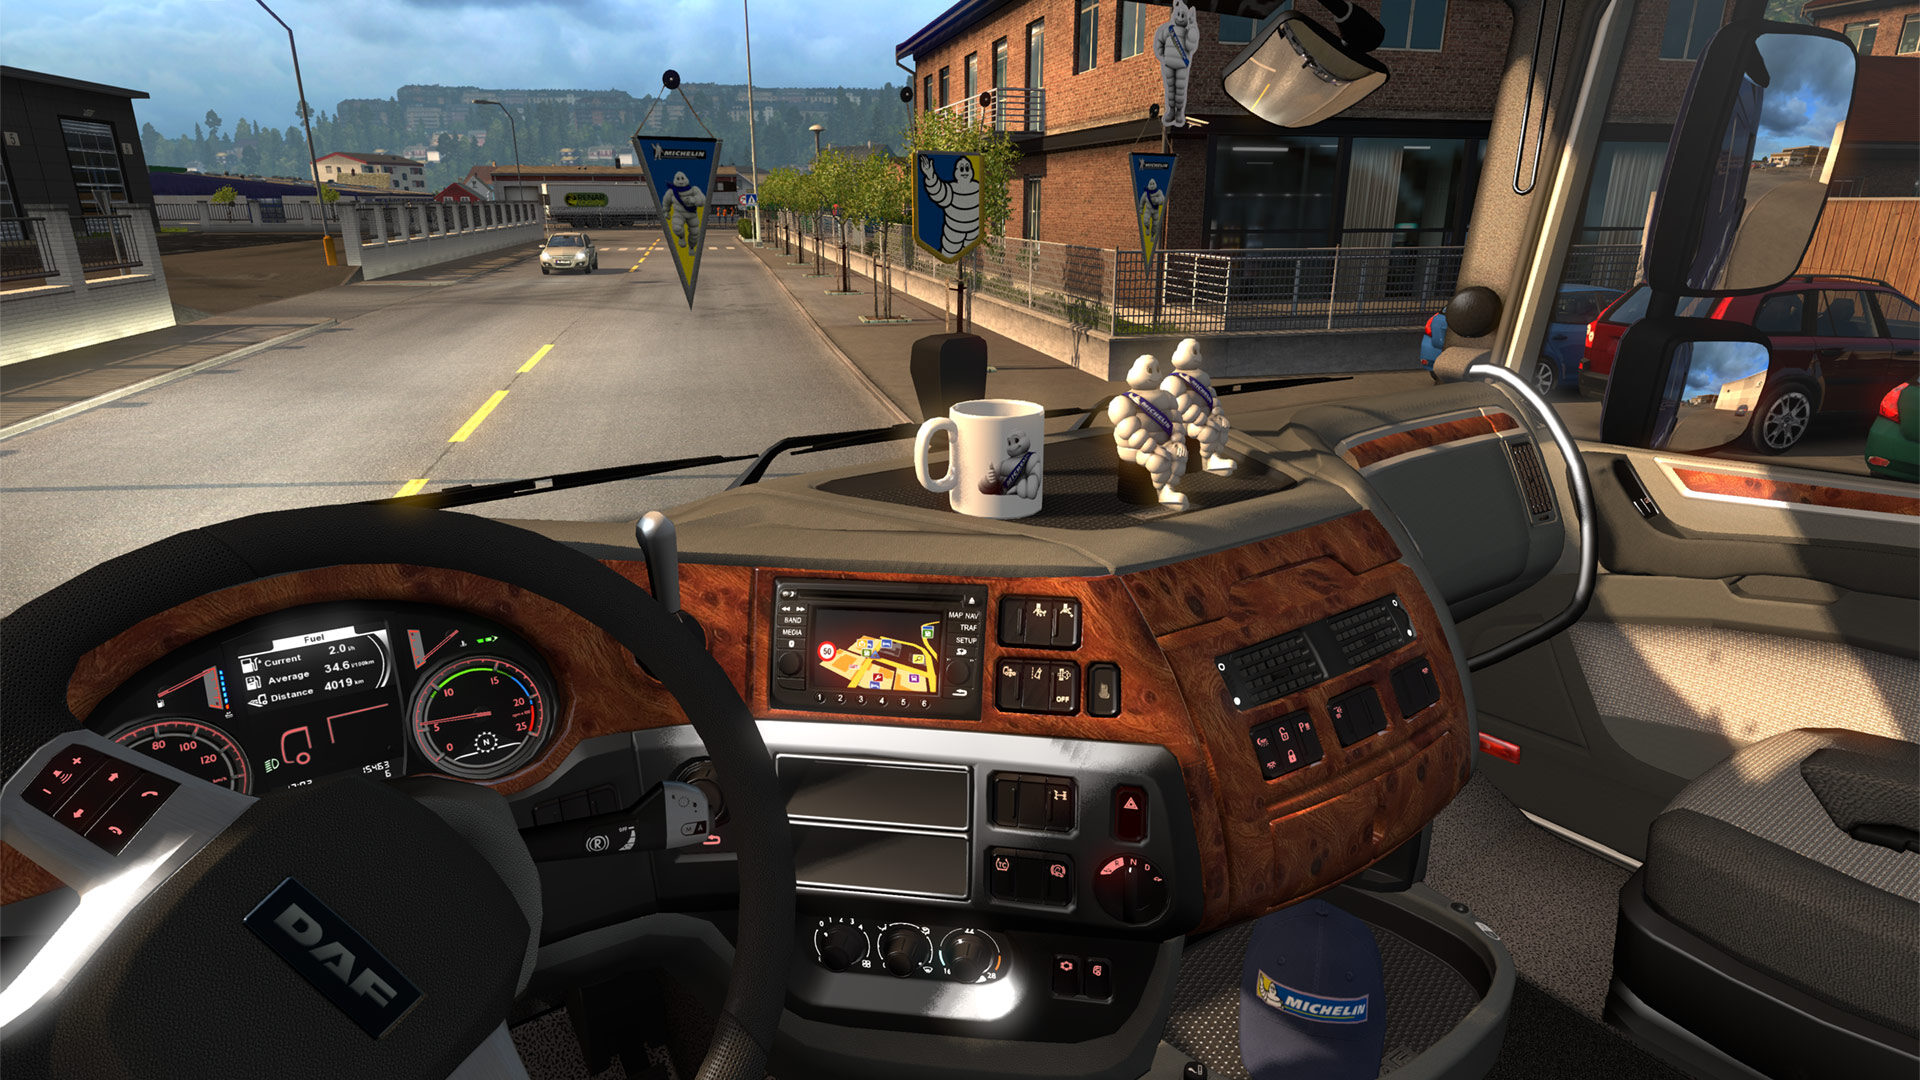 Euro Truck Simulator 2 PC Steam key, Cheap price